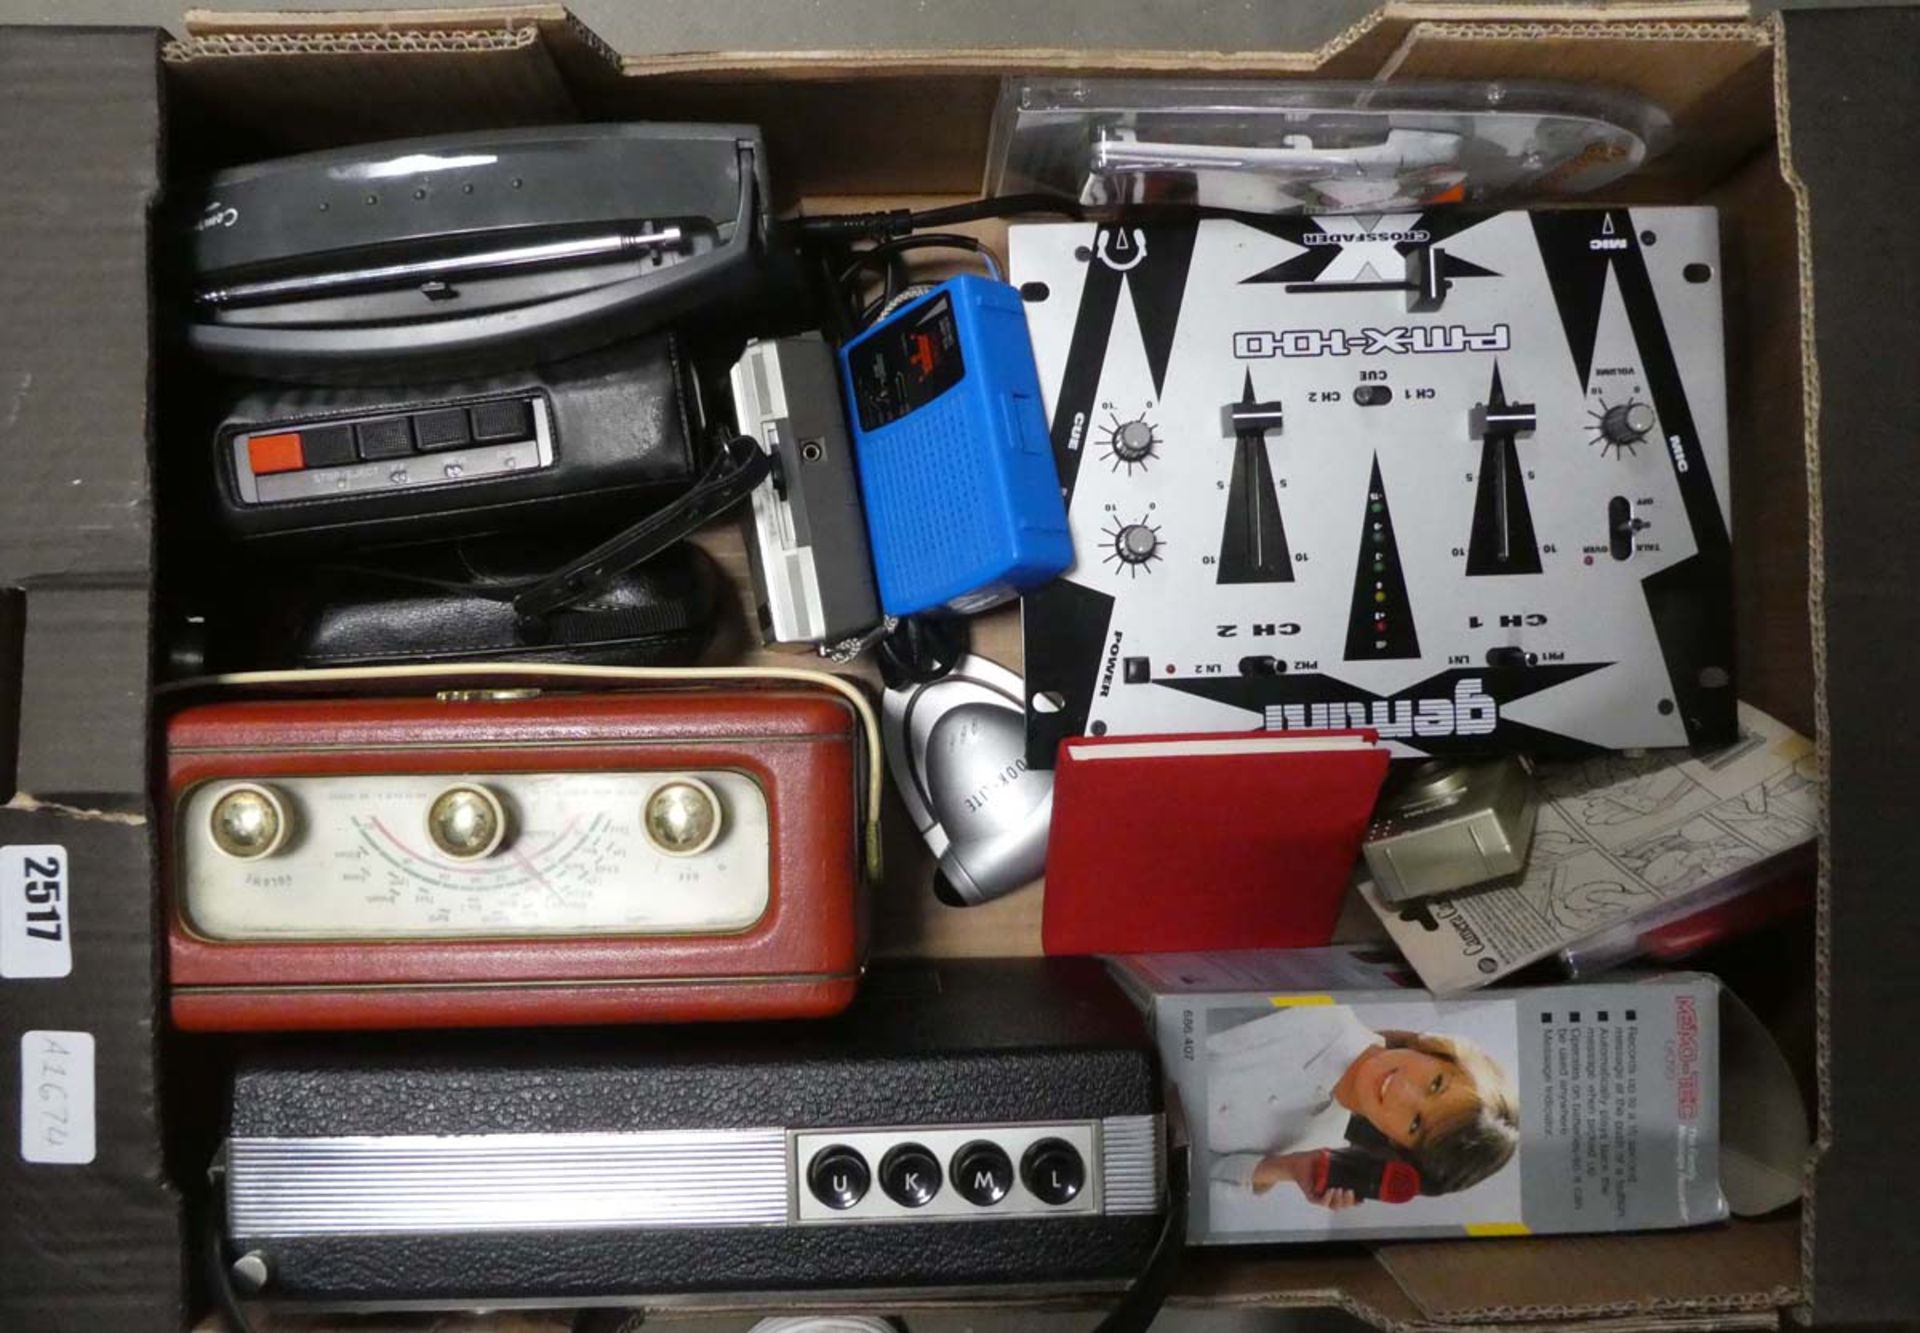 Tray containing a selection of radios, Gemini mixer, etc